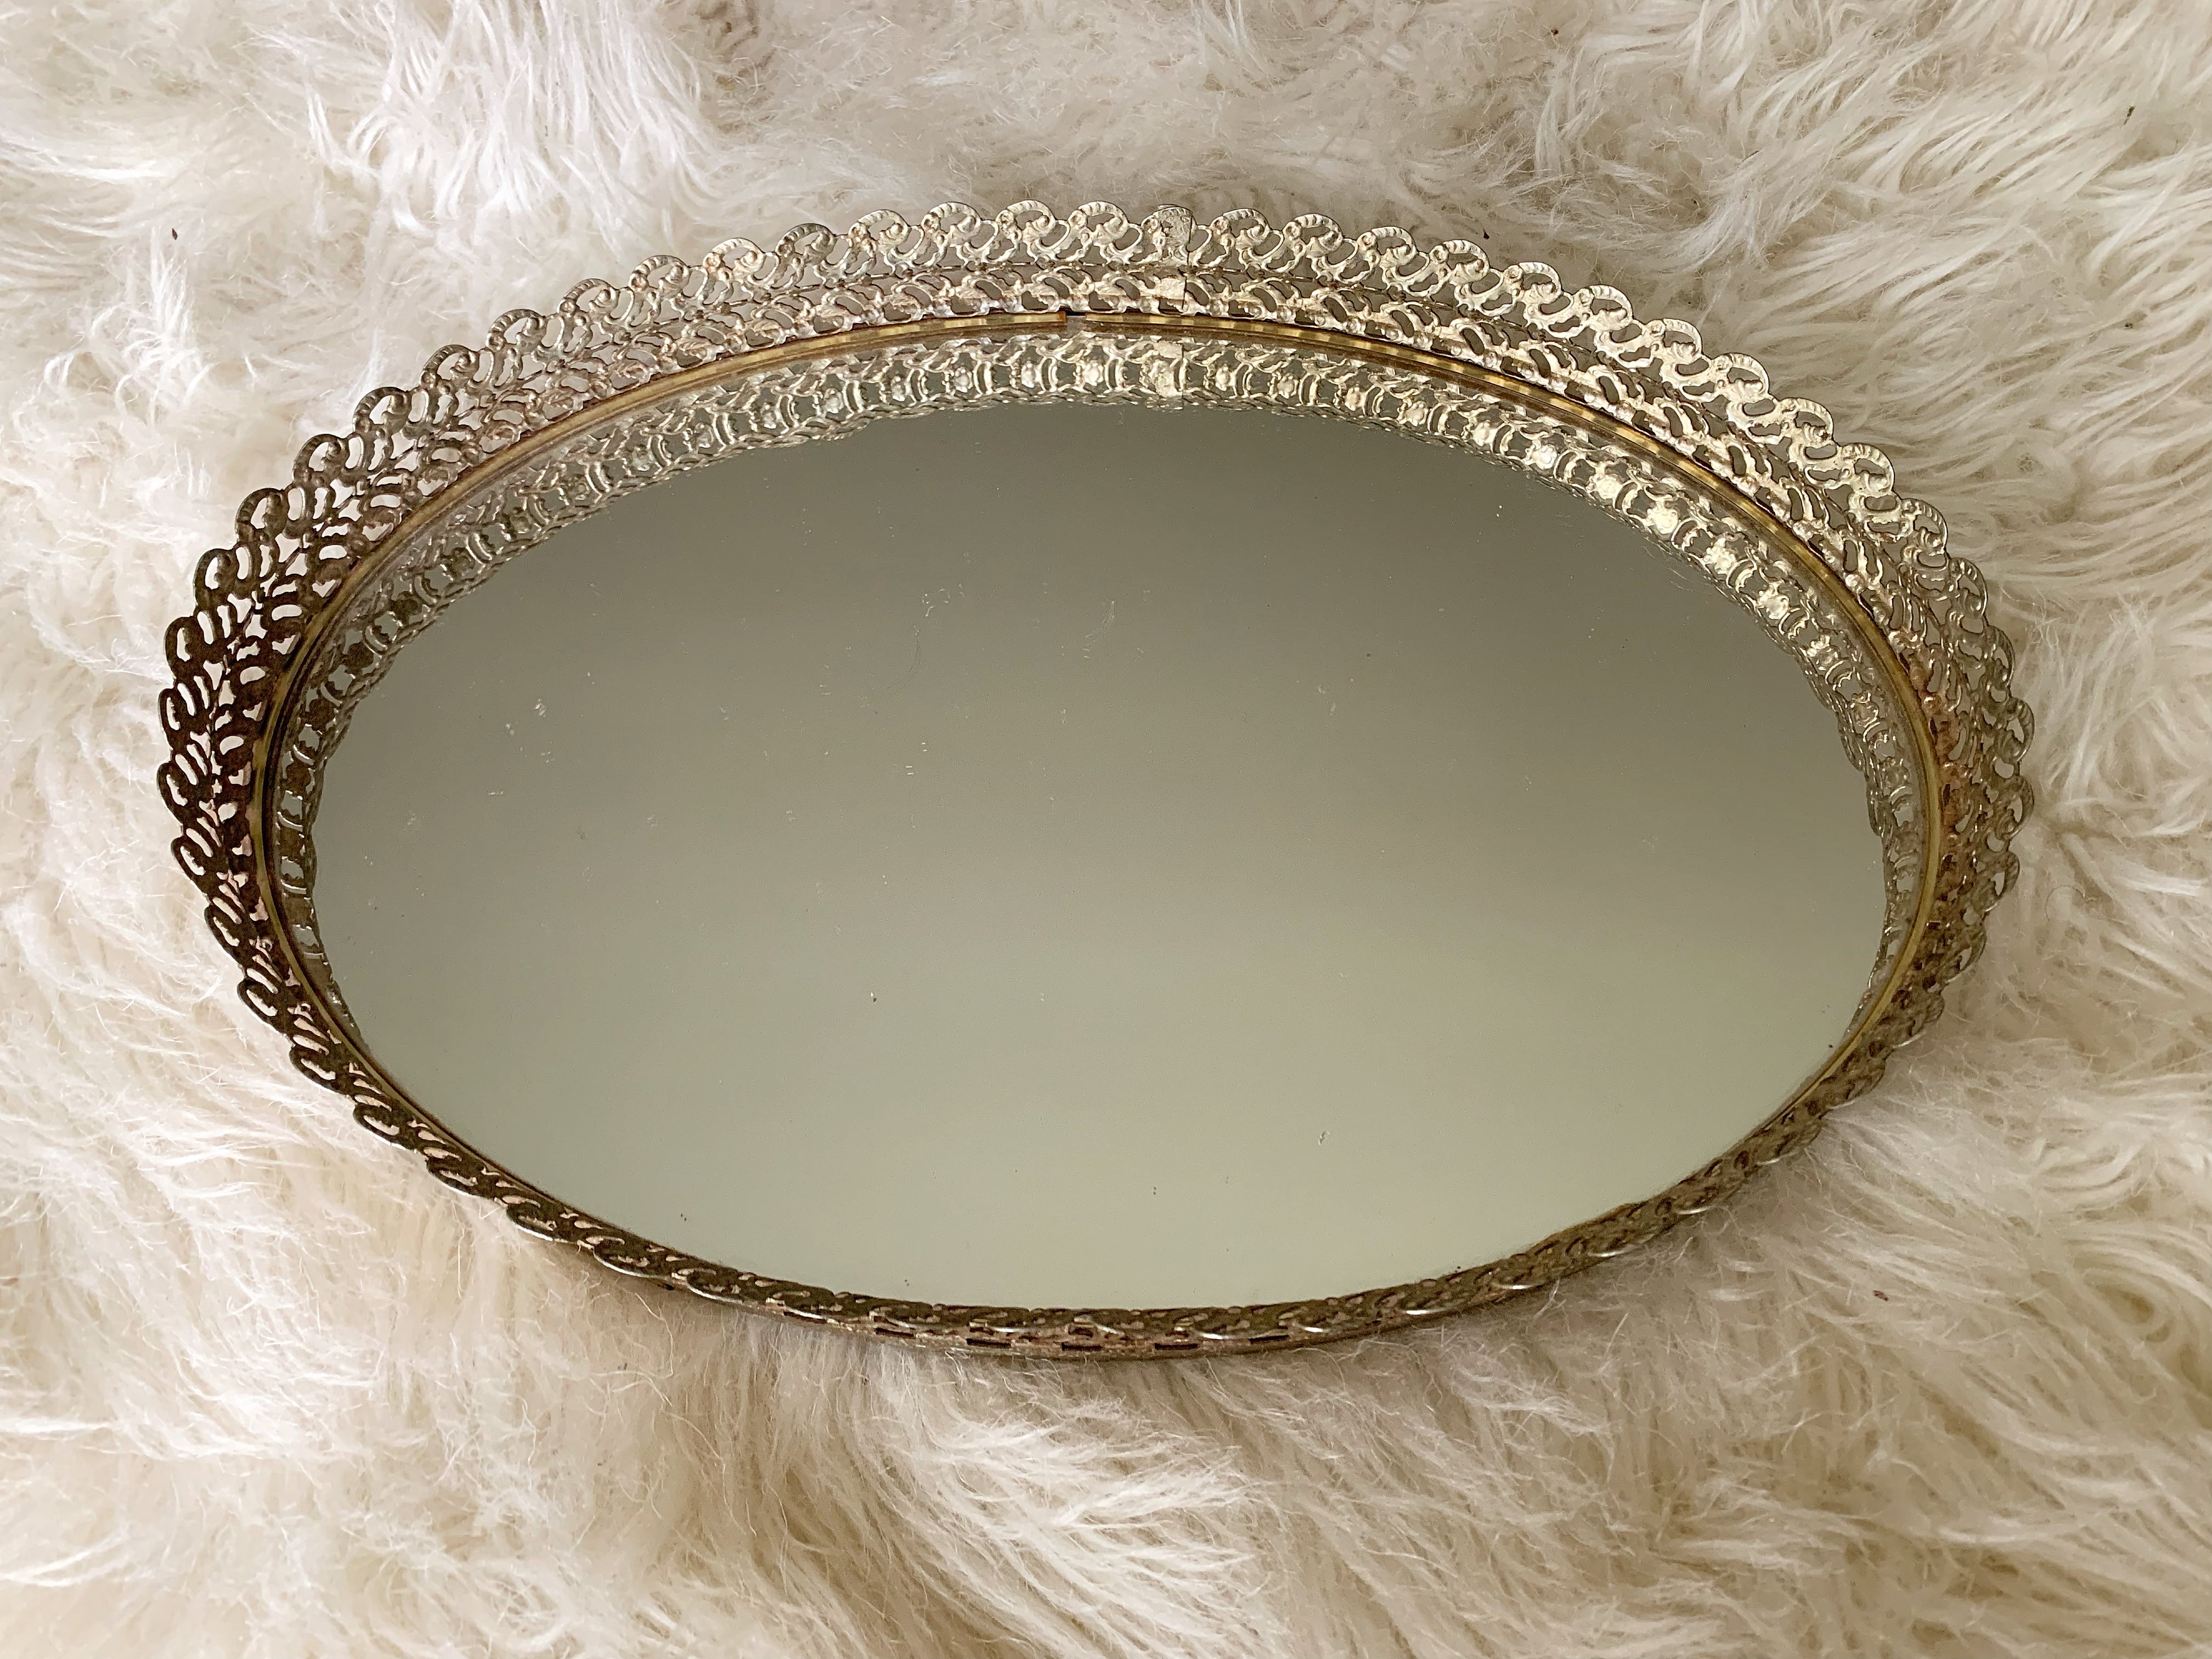 Antique Oval Filigree Mirror Tray